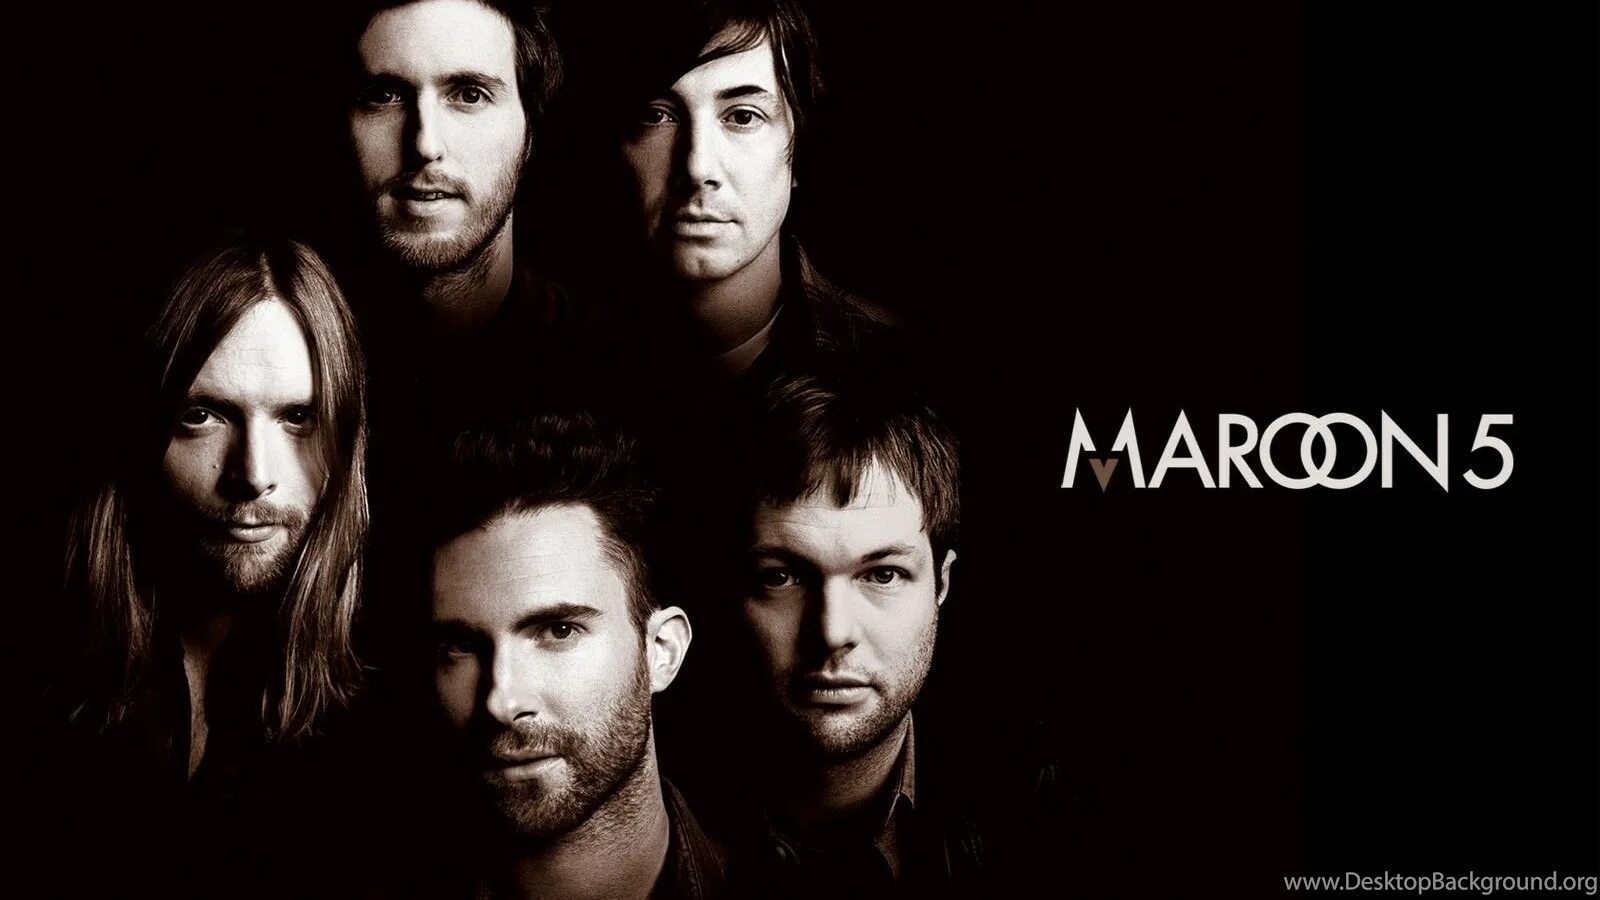 Марон 5 песни. Марун 5. Maroon 5 обложка. Maroon 5 обложки альбомов. Maroon 5 2002.